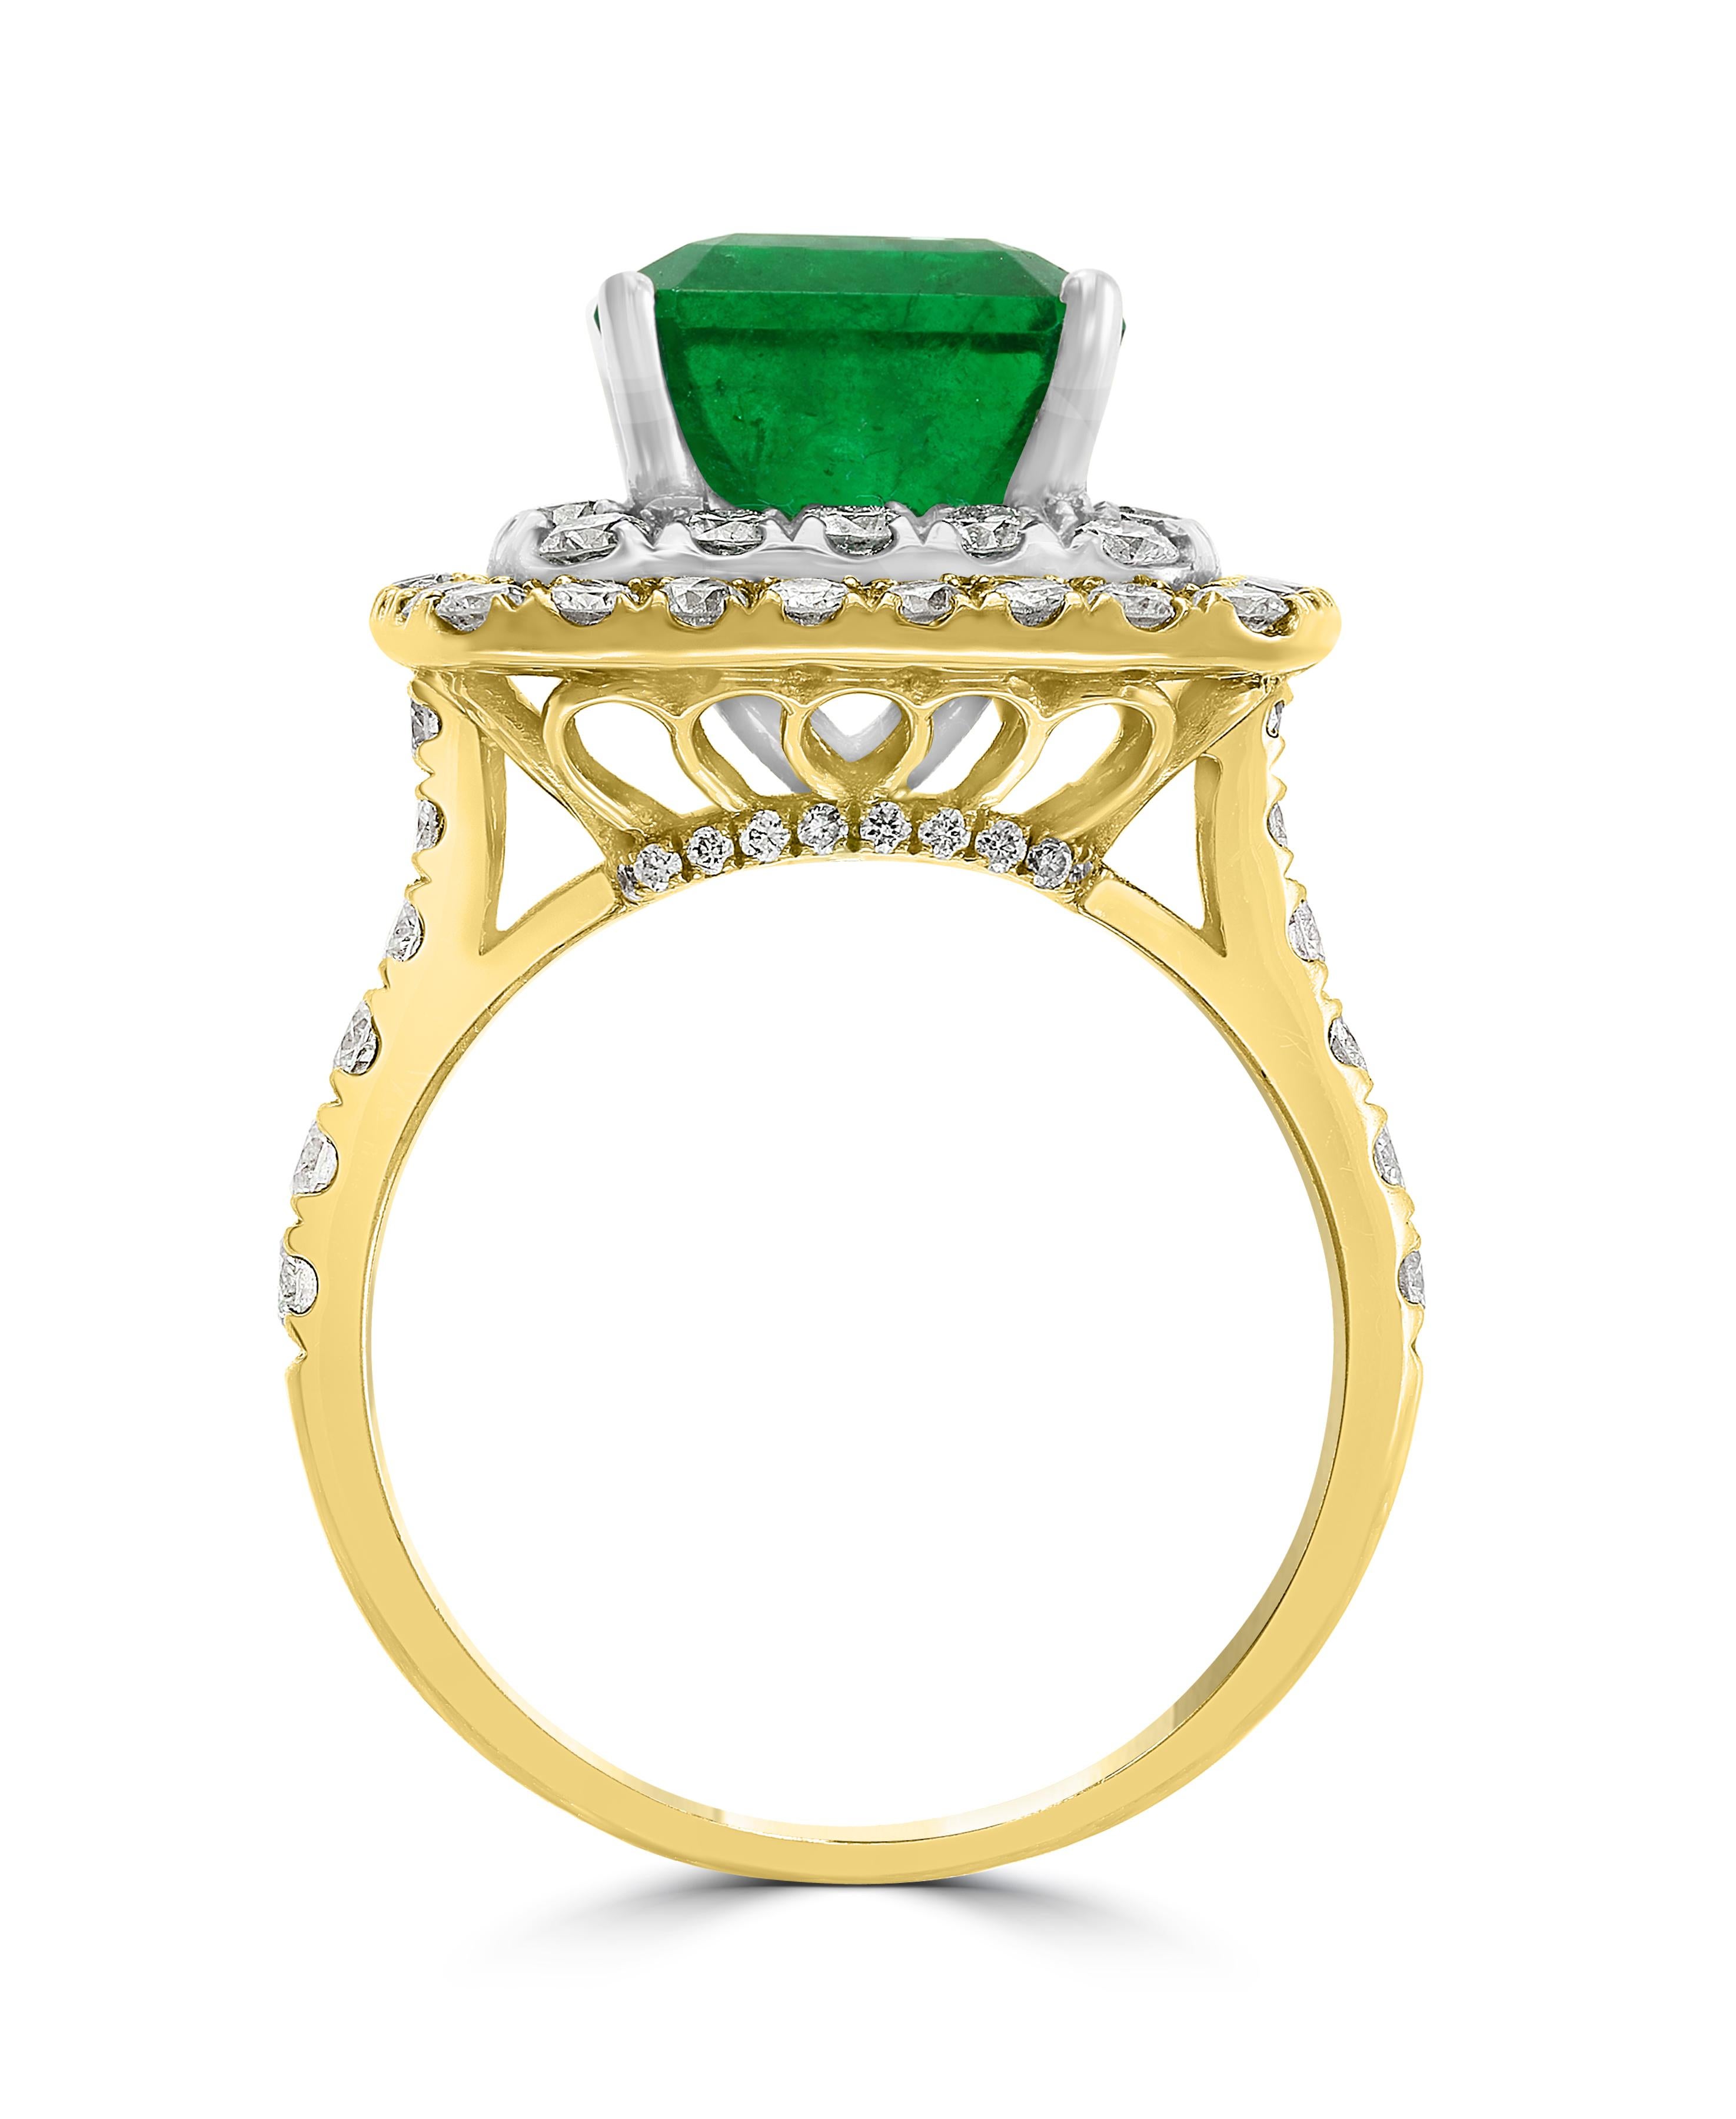 4.5 carat emerald cut diamond ring